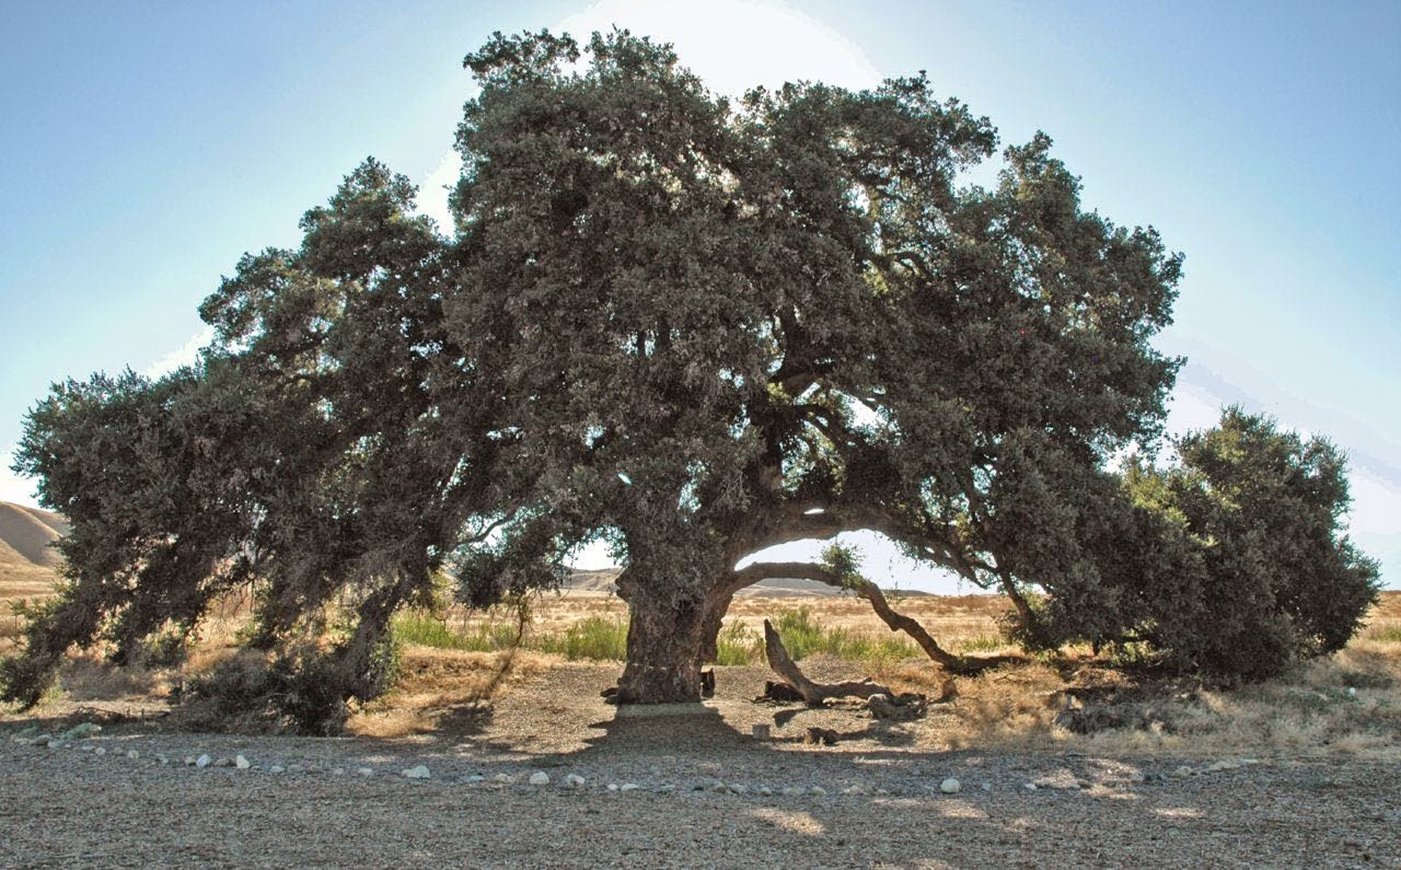 Ядовитый дуб. Quercus agrifolia. Мамврийский дуб. Калифорнийский дуб. Дуб в Калифорнии.